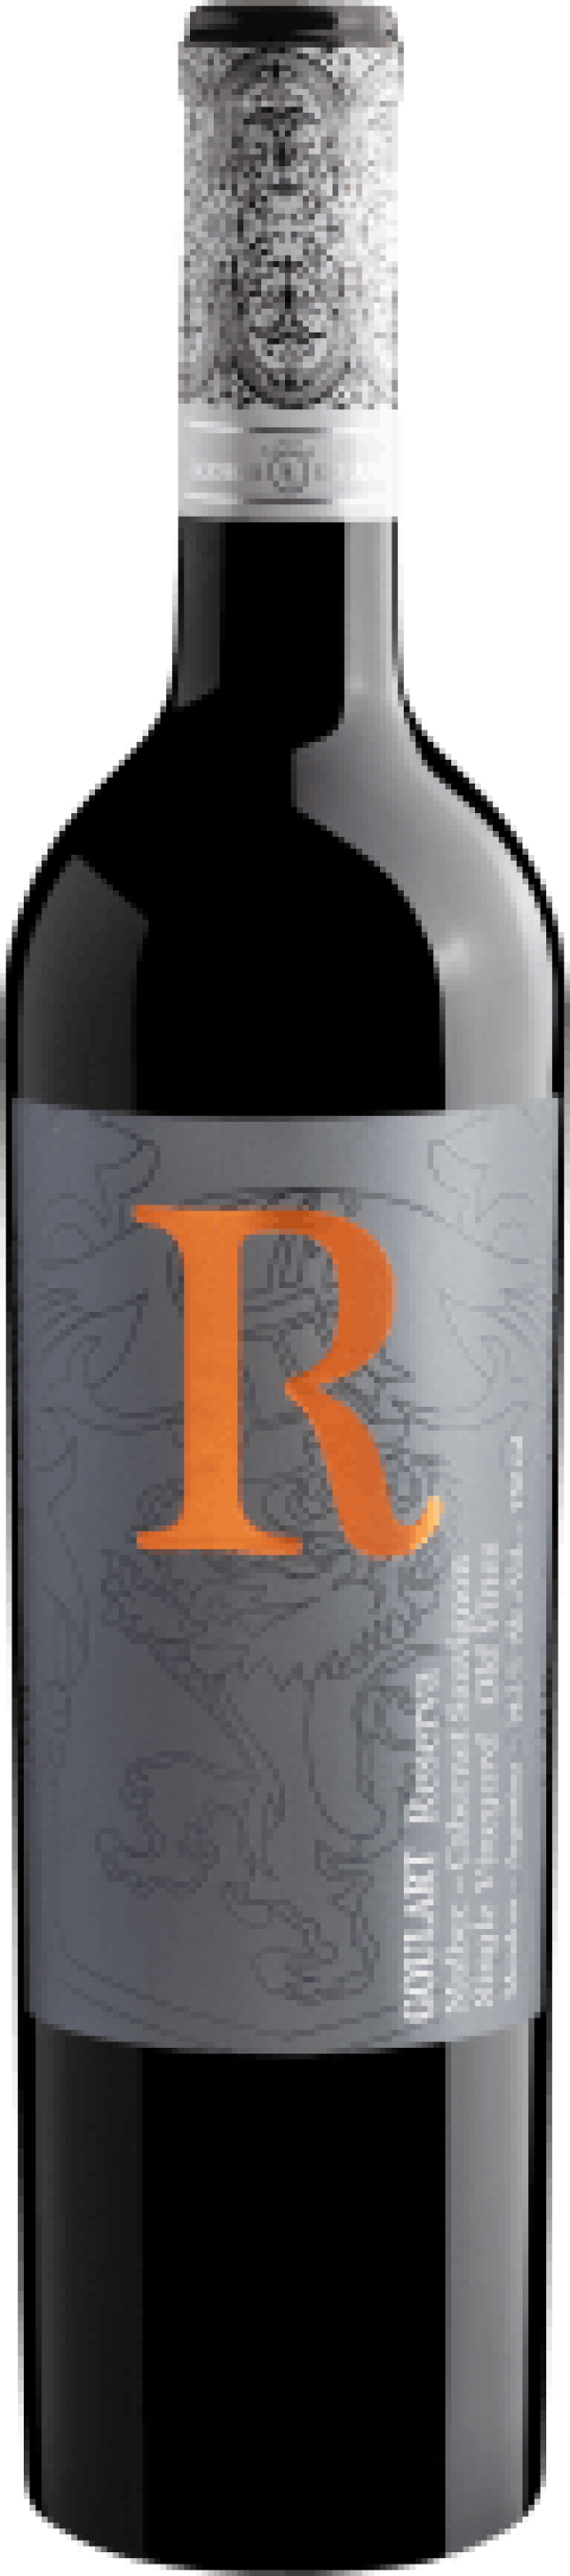 Goulart R Reserva Malbec-Cabernet Sauvignon Single Vineyard Old Vines 2020